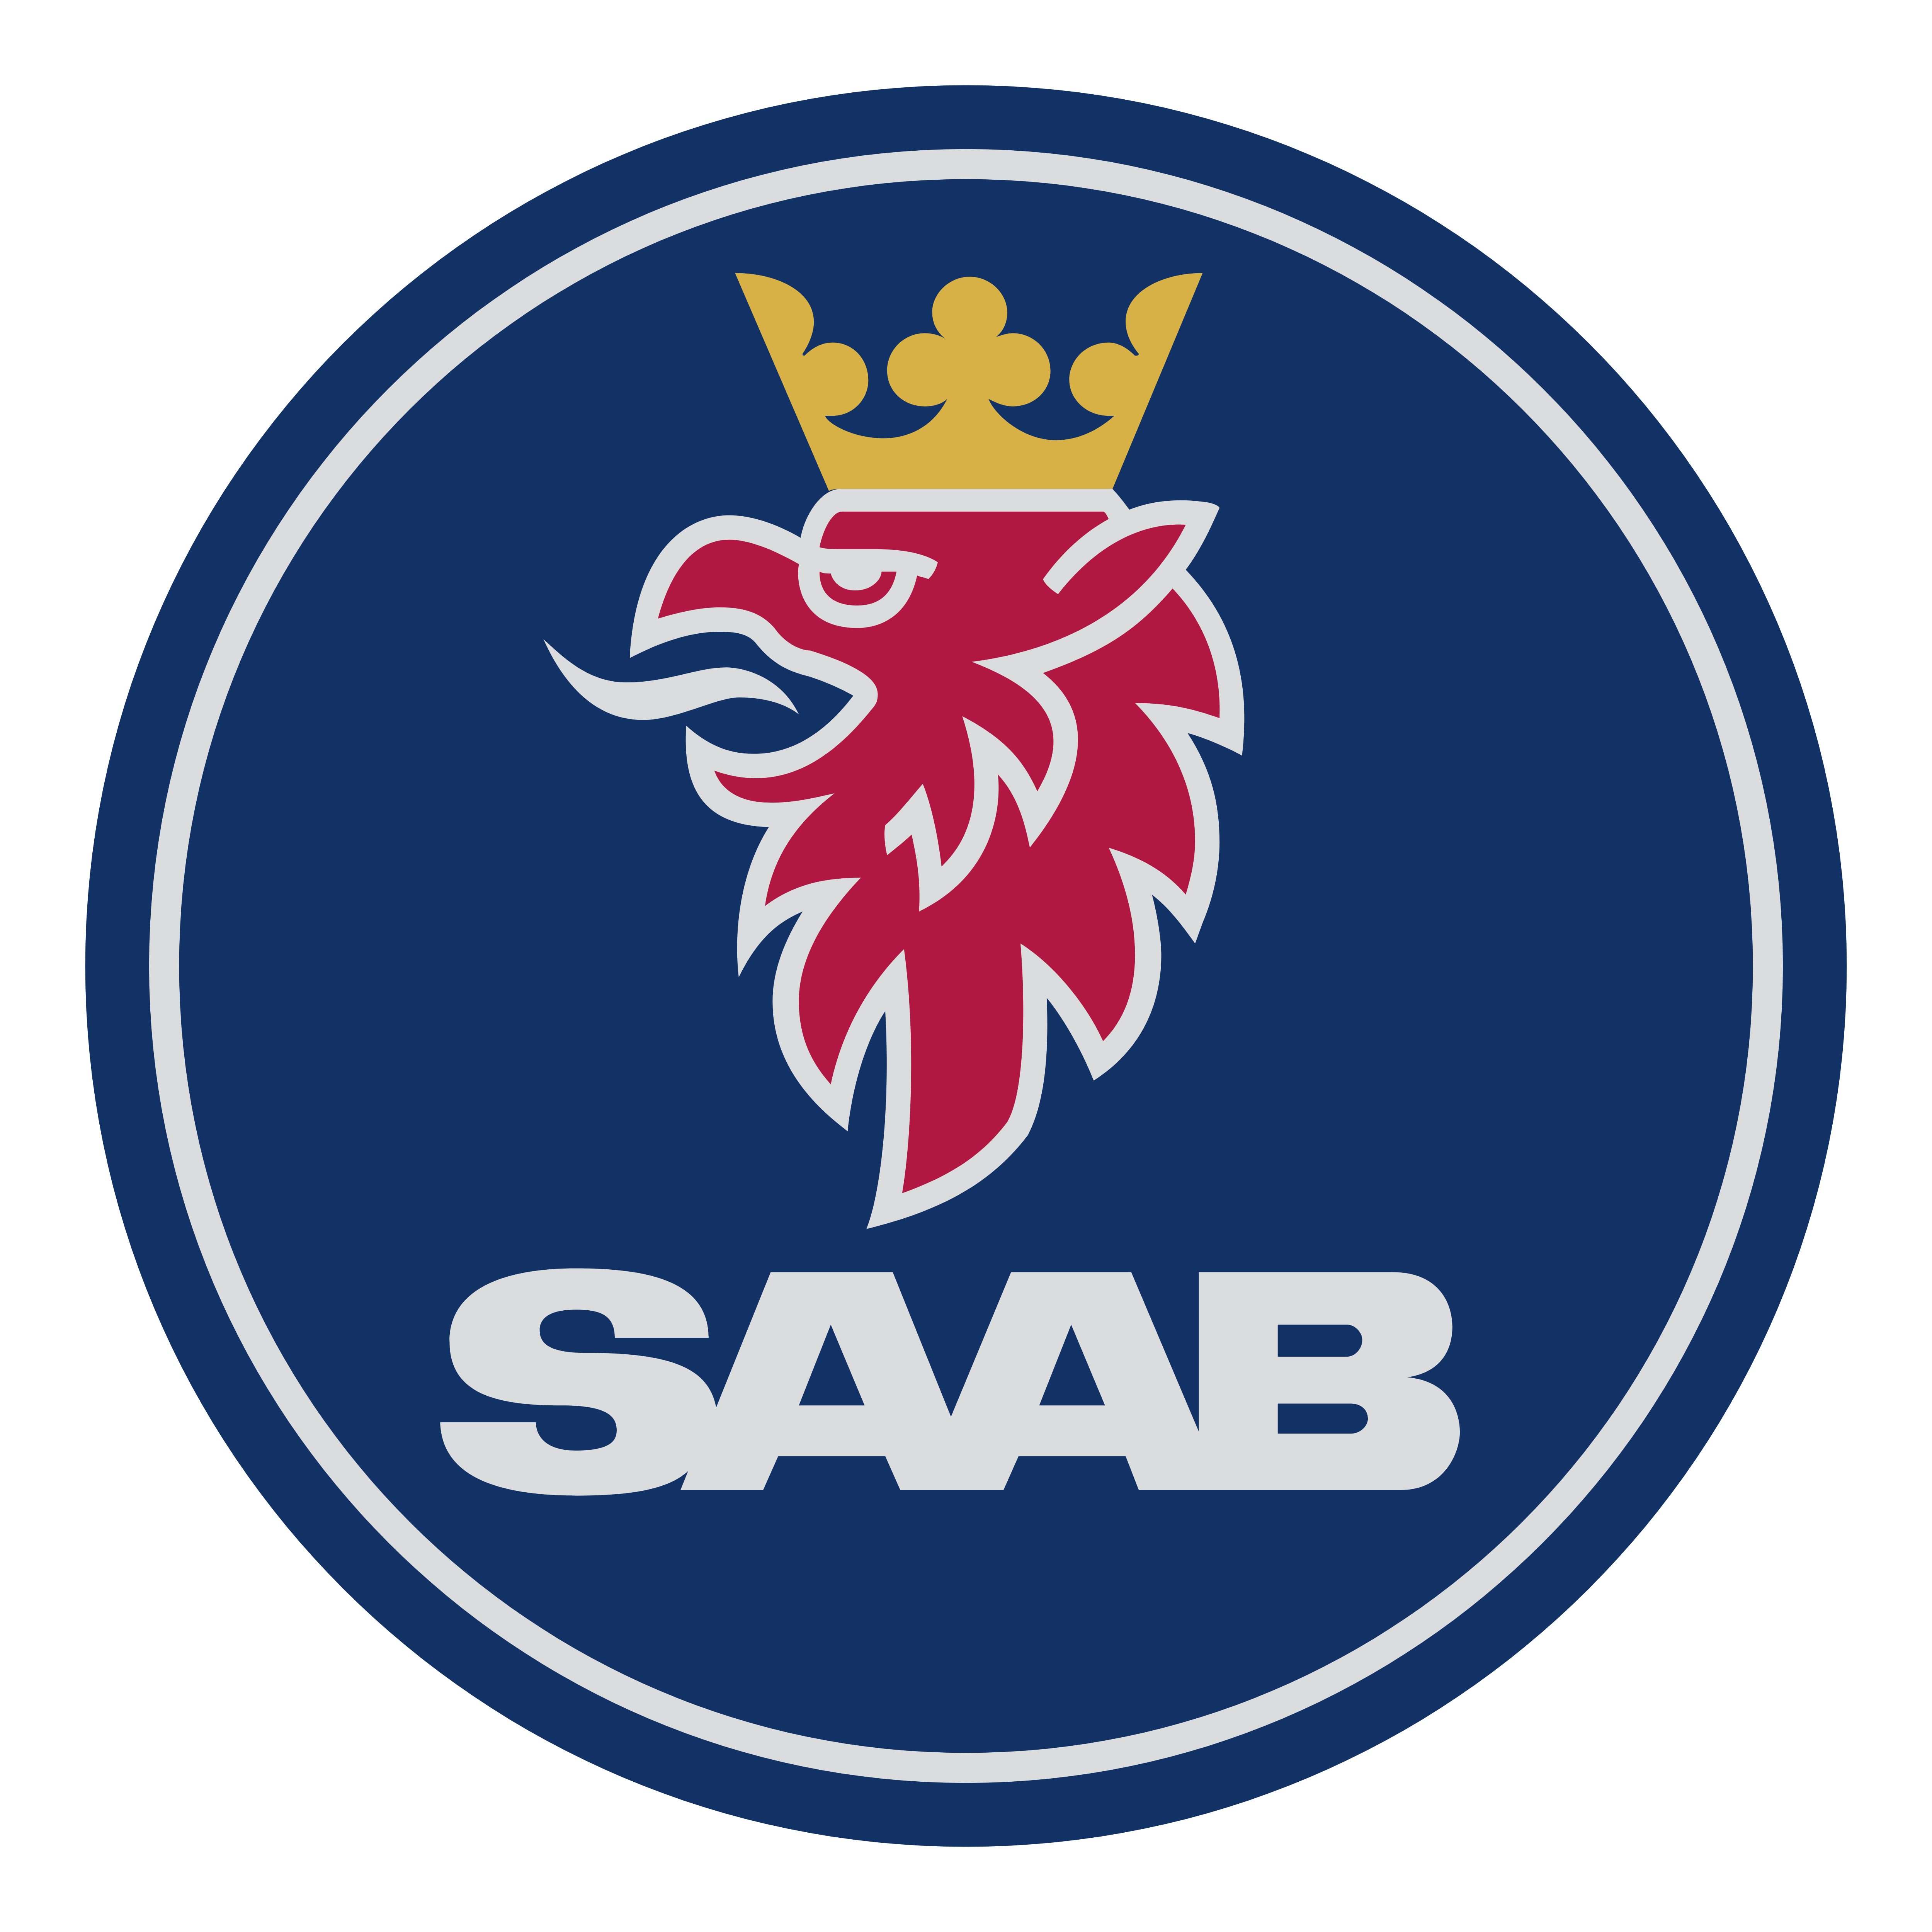 https://logos-download.com/wp-content/uploads/2016/08/Saab_logo_circle.png